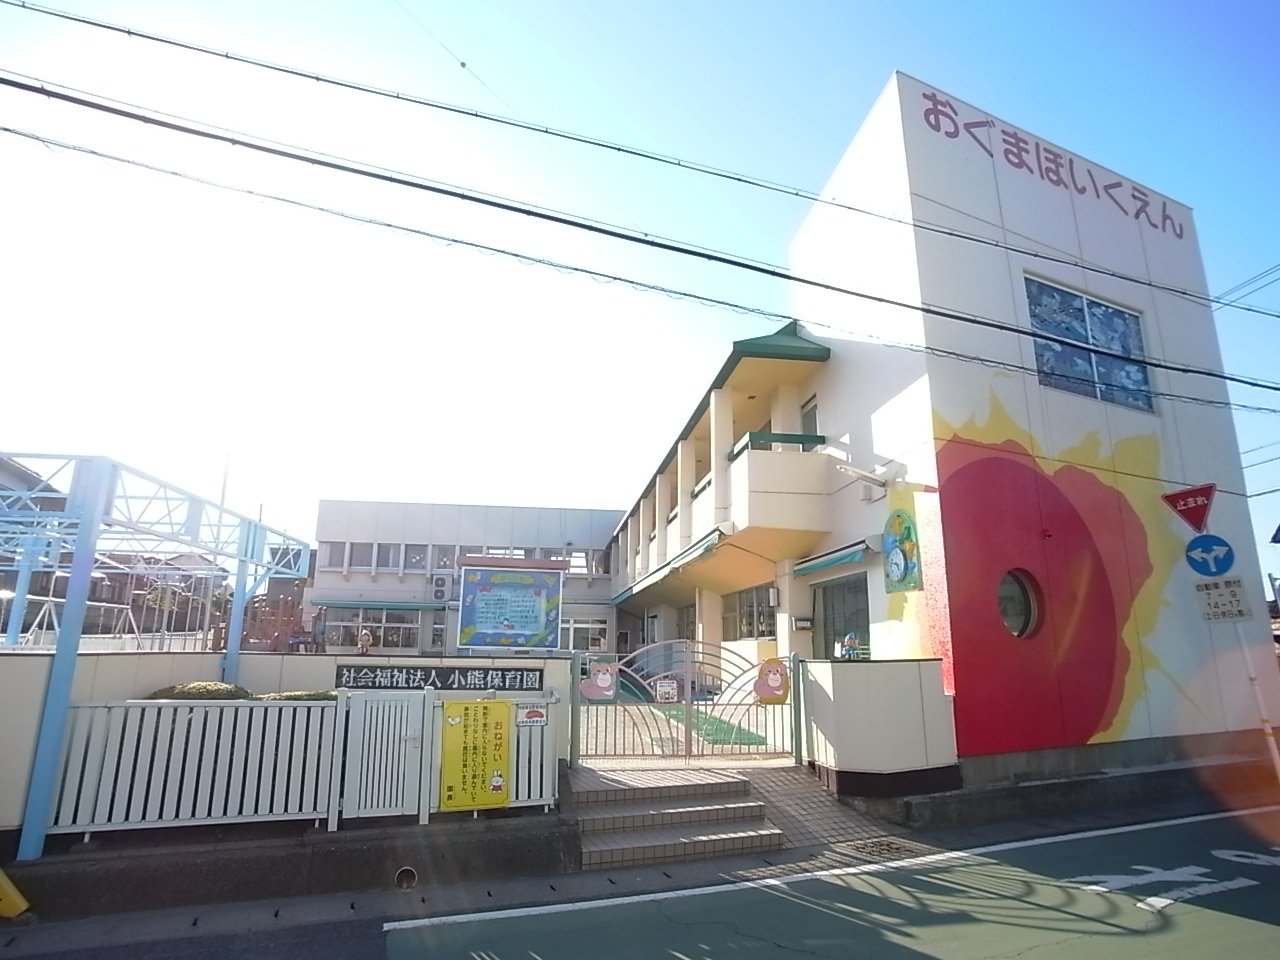 kindergarten ・ Nursery. Bear cub nursery school (kindergarten ・ 1136m to the nursery)